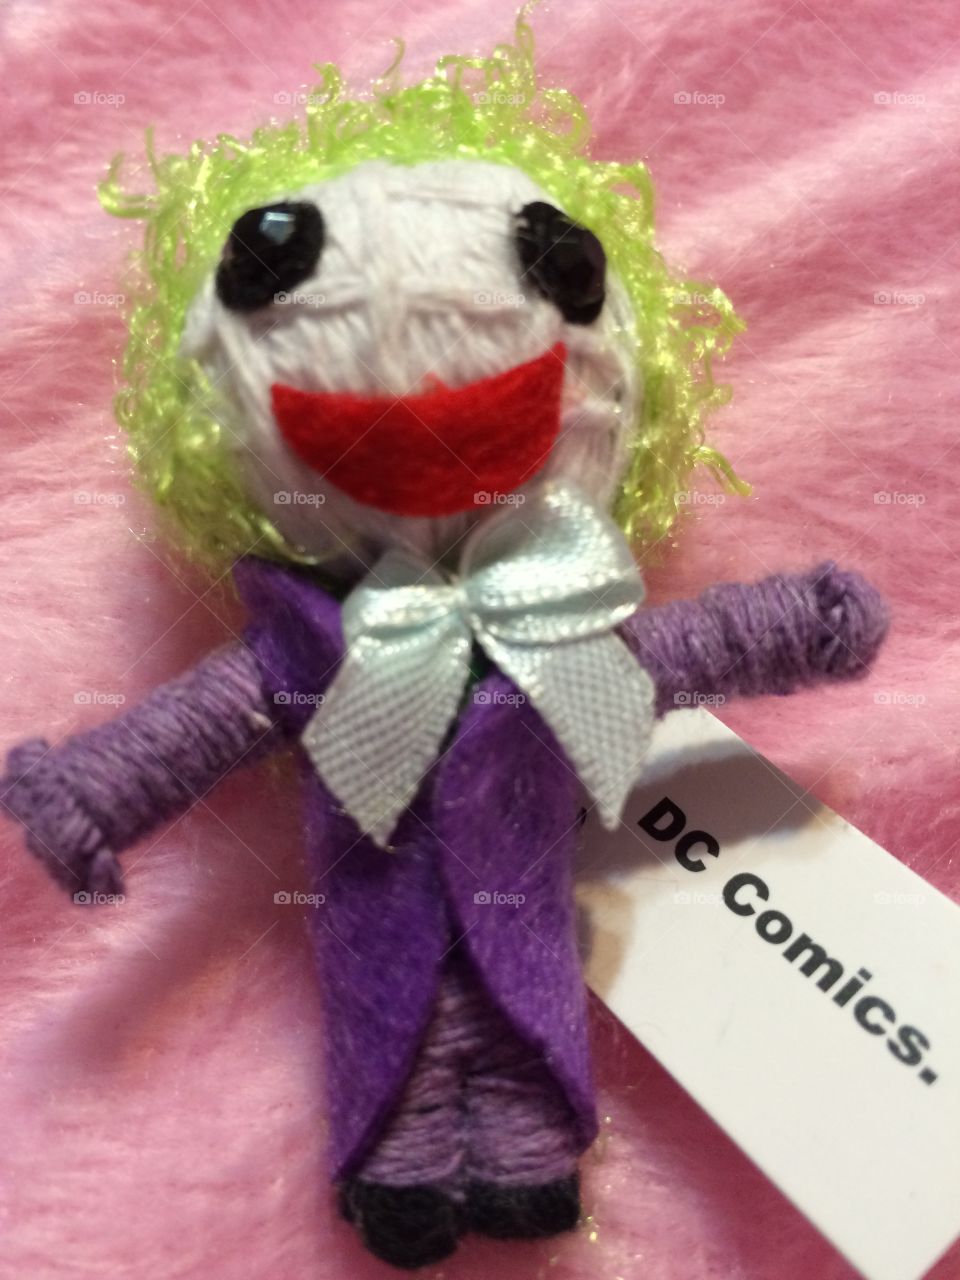 Joker yarn doll! So cute! ❤️😍